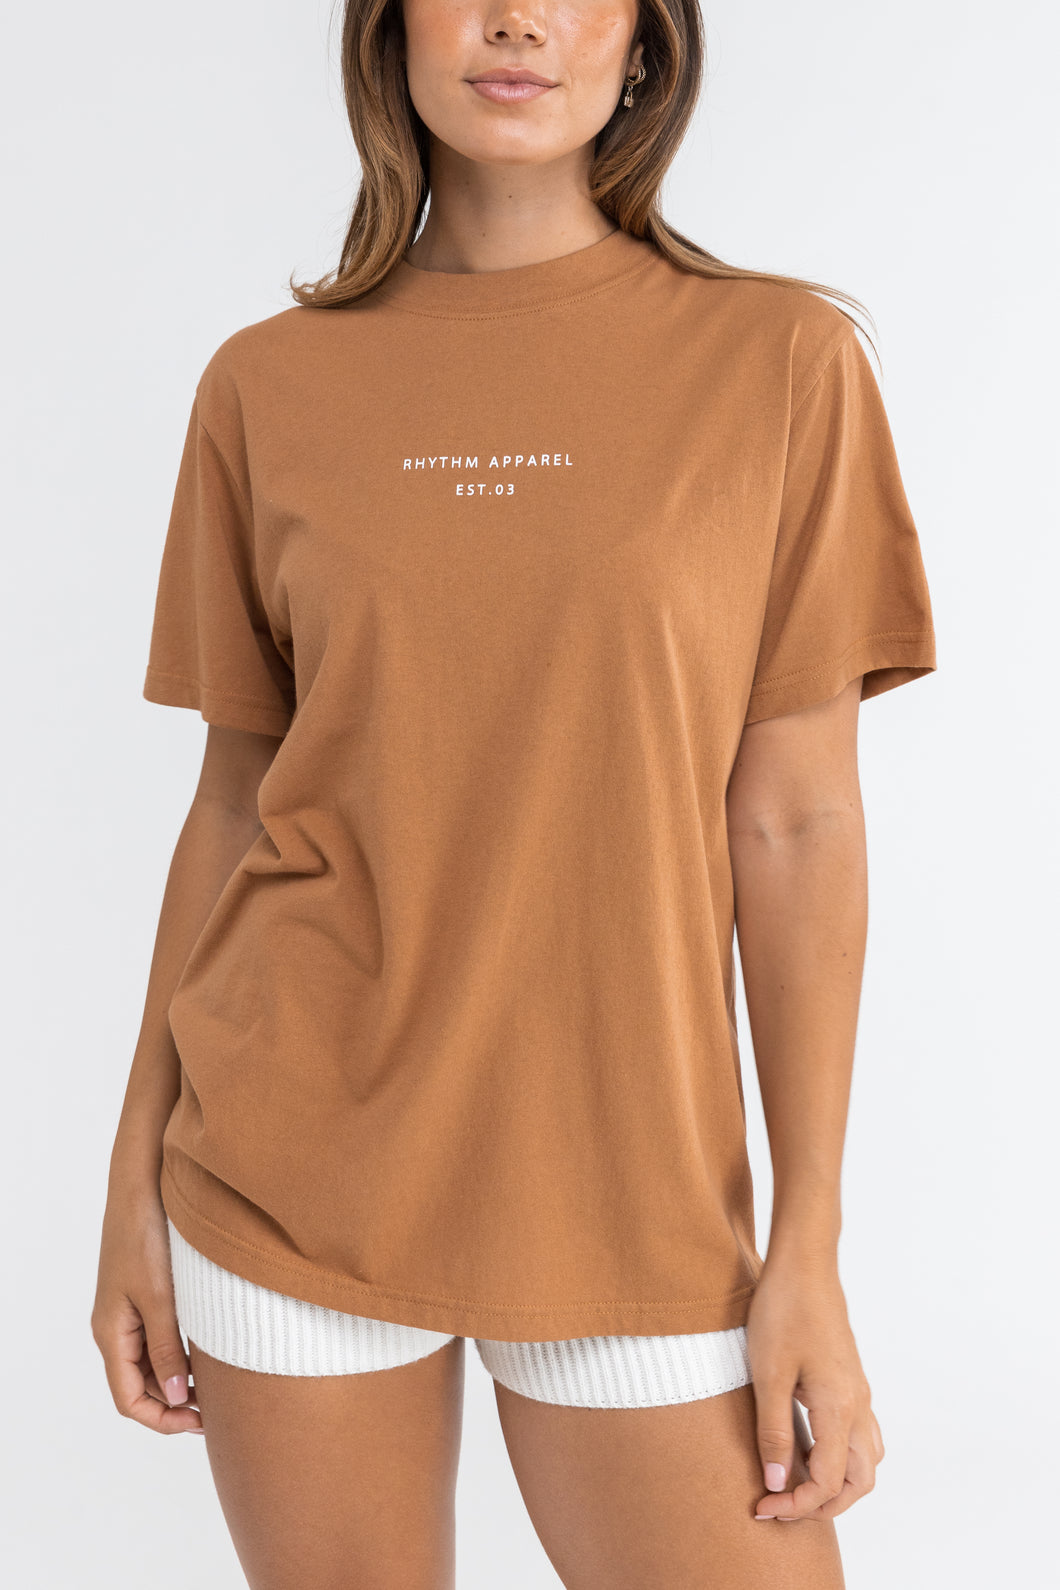 Rhythm - Classic Brand Shirt caramel